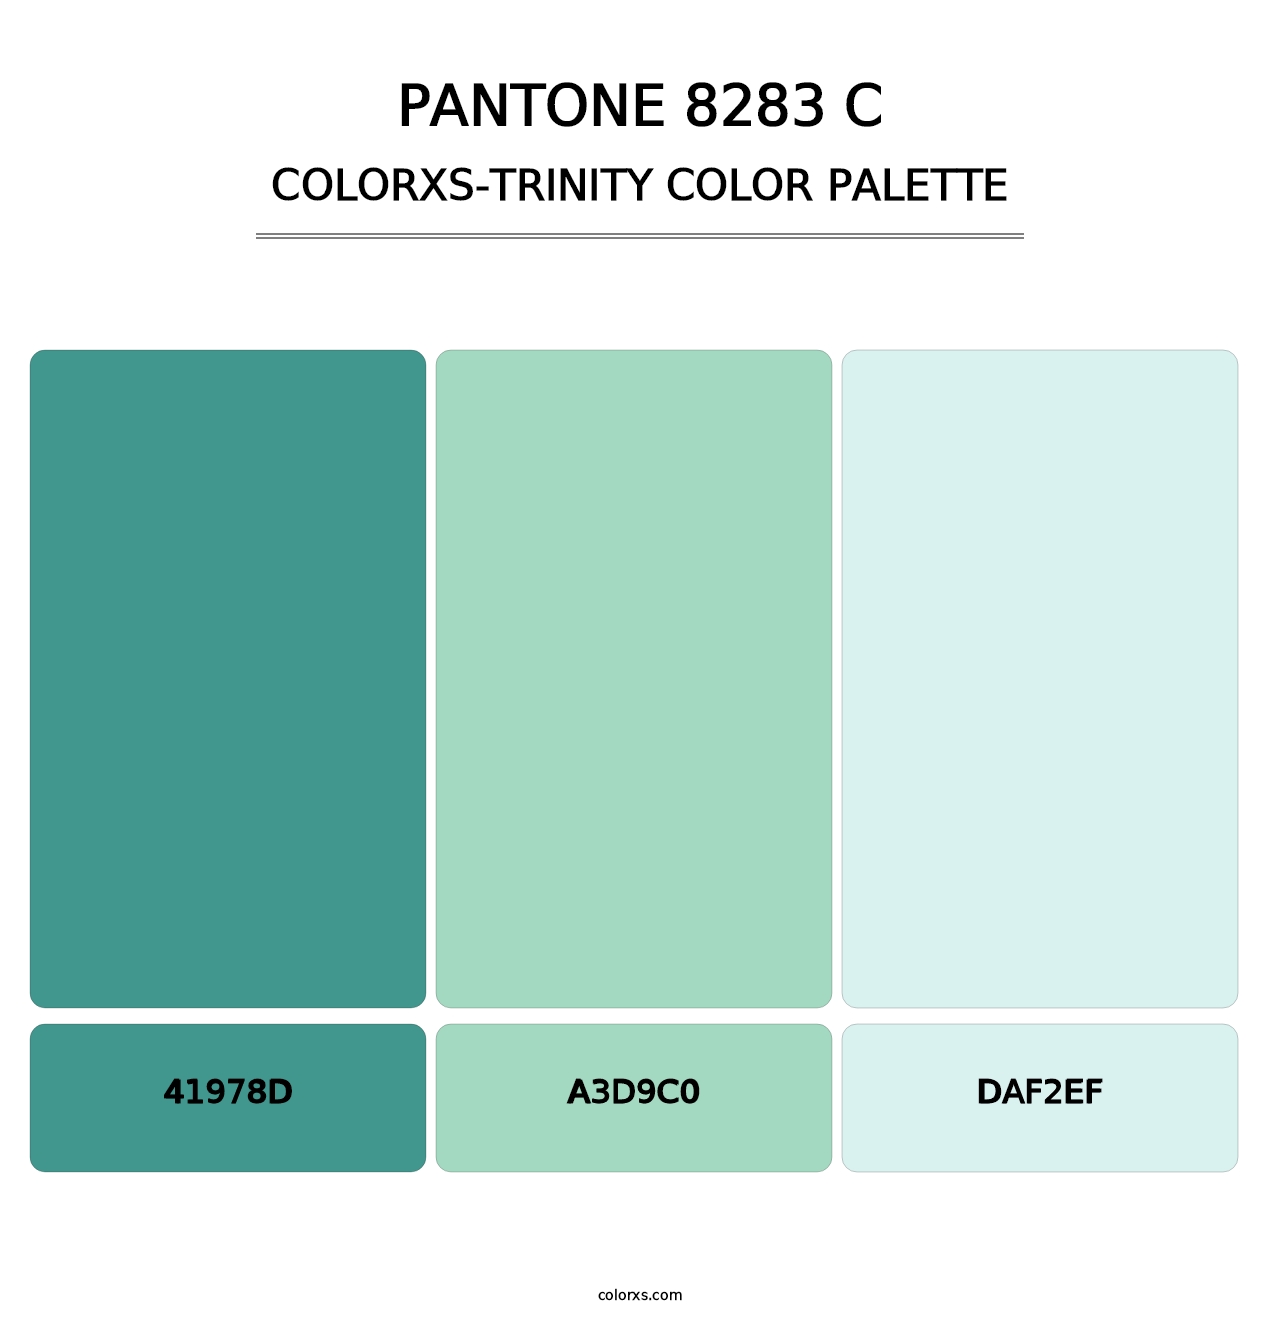 PANTONE 8283 C - Colorxs Trinity Palette